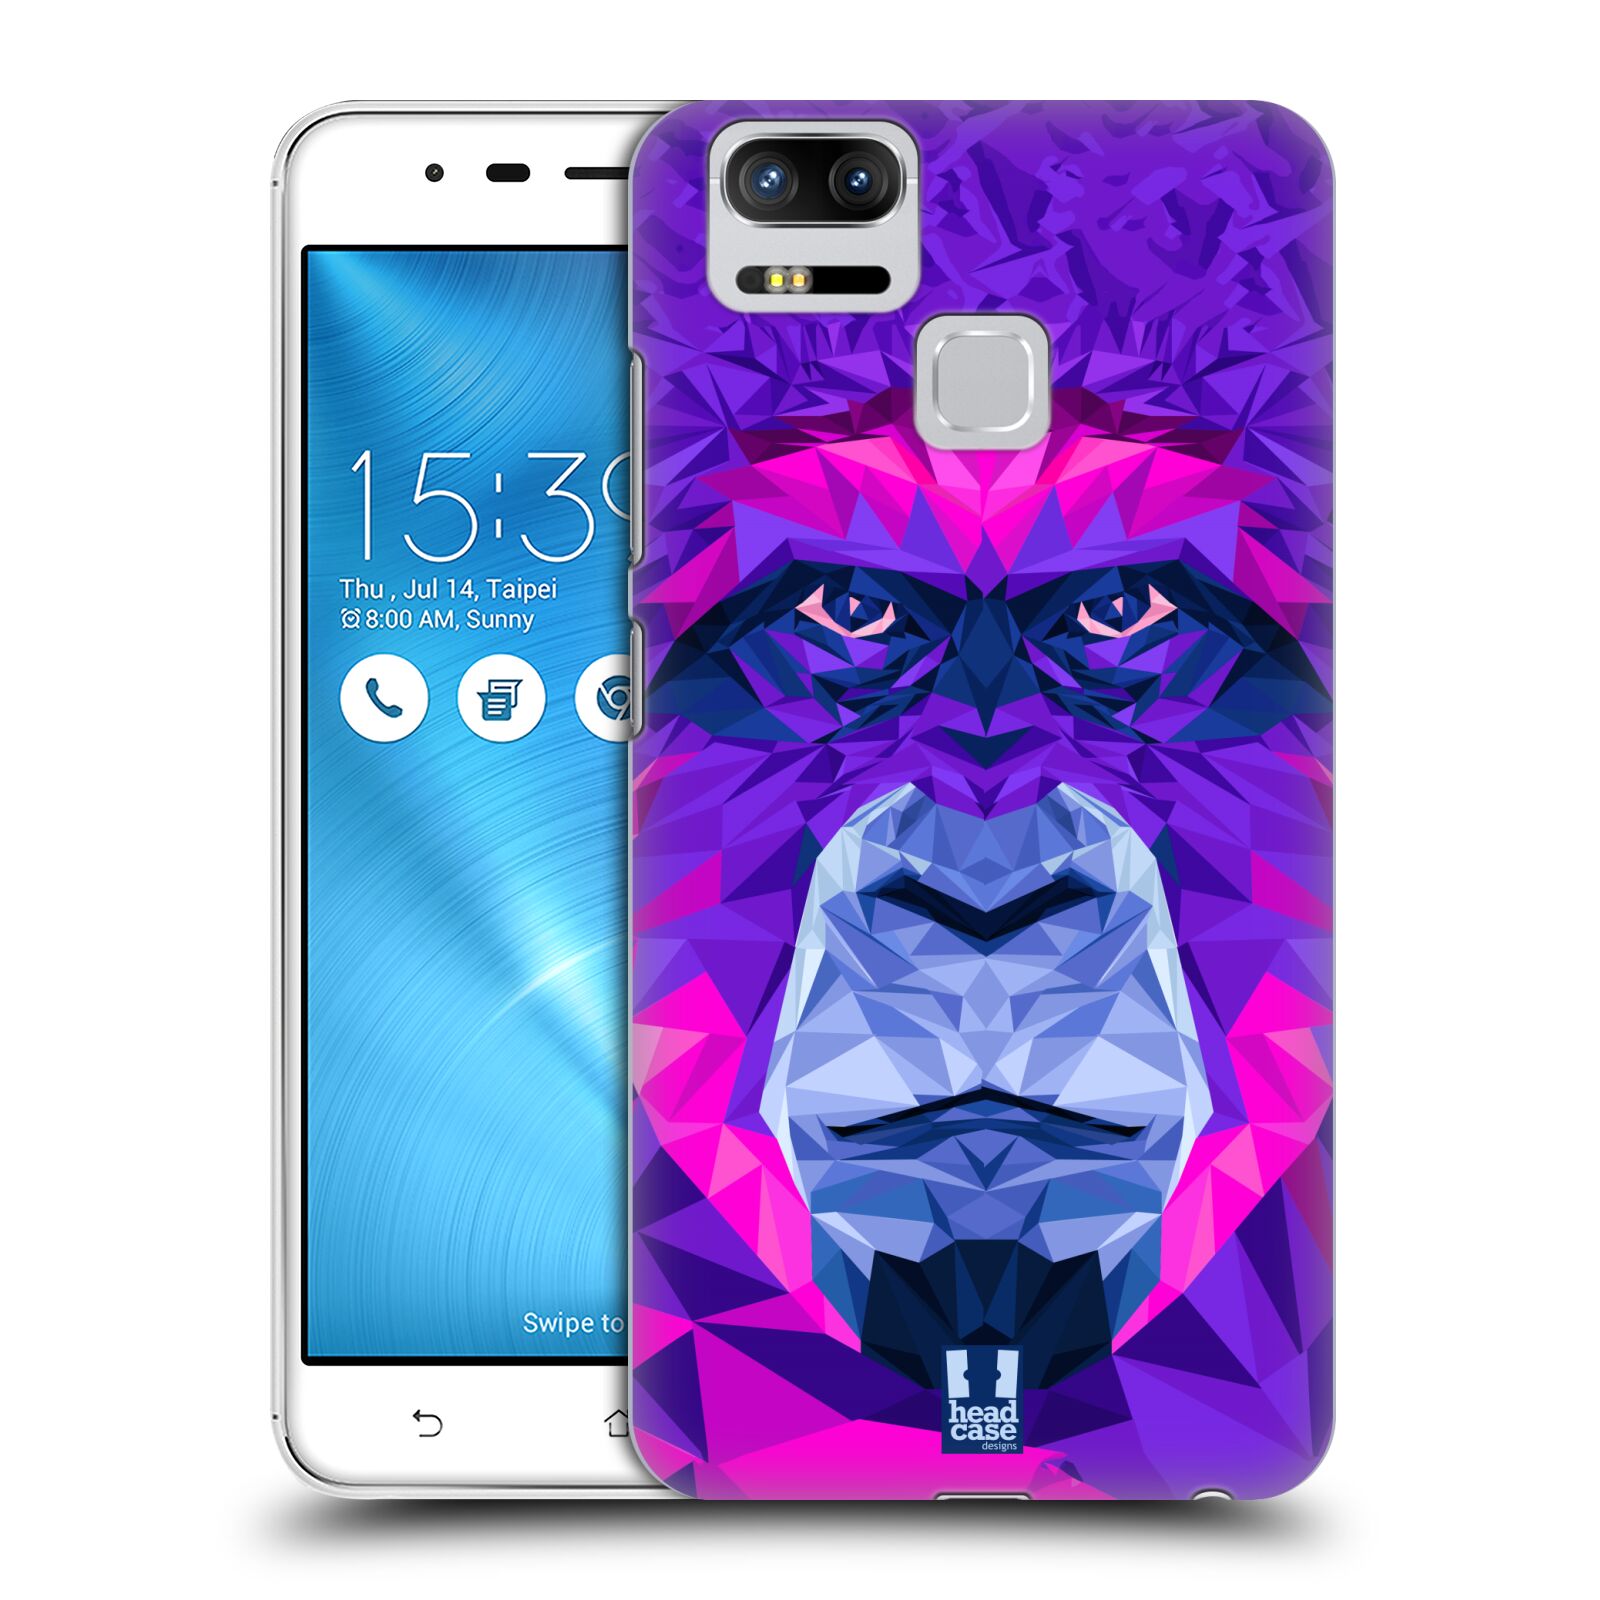 HEAD CASE plastový obal na mobil Asus Zenfone 3 Zoom ZE553KL vzor Geometrická zvířata 2 Orangutan